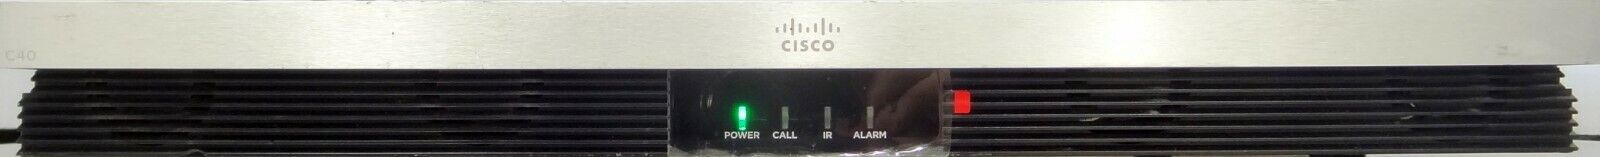 Cisco Tandberg TTC6-11 Video Conference System 800-34910-02 CTS-C40CODEC-K9